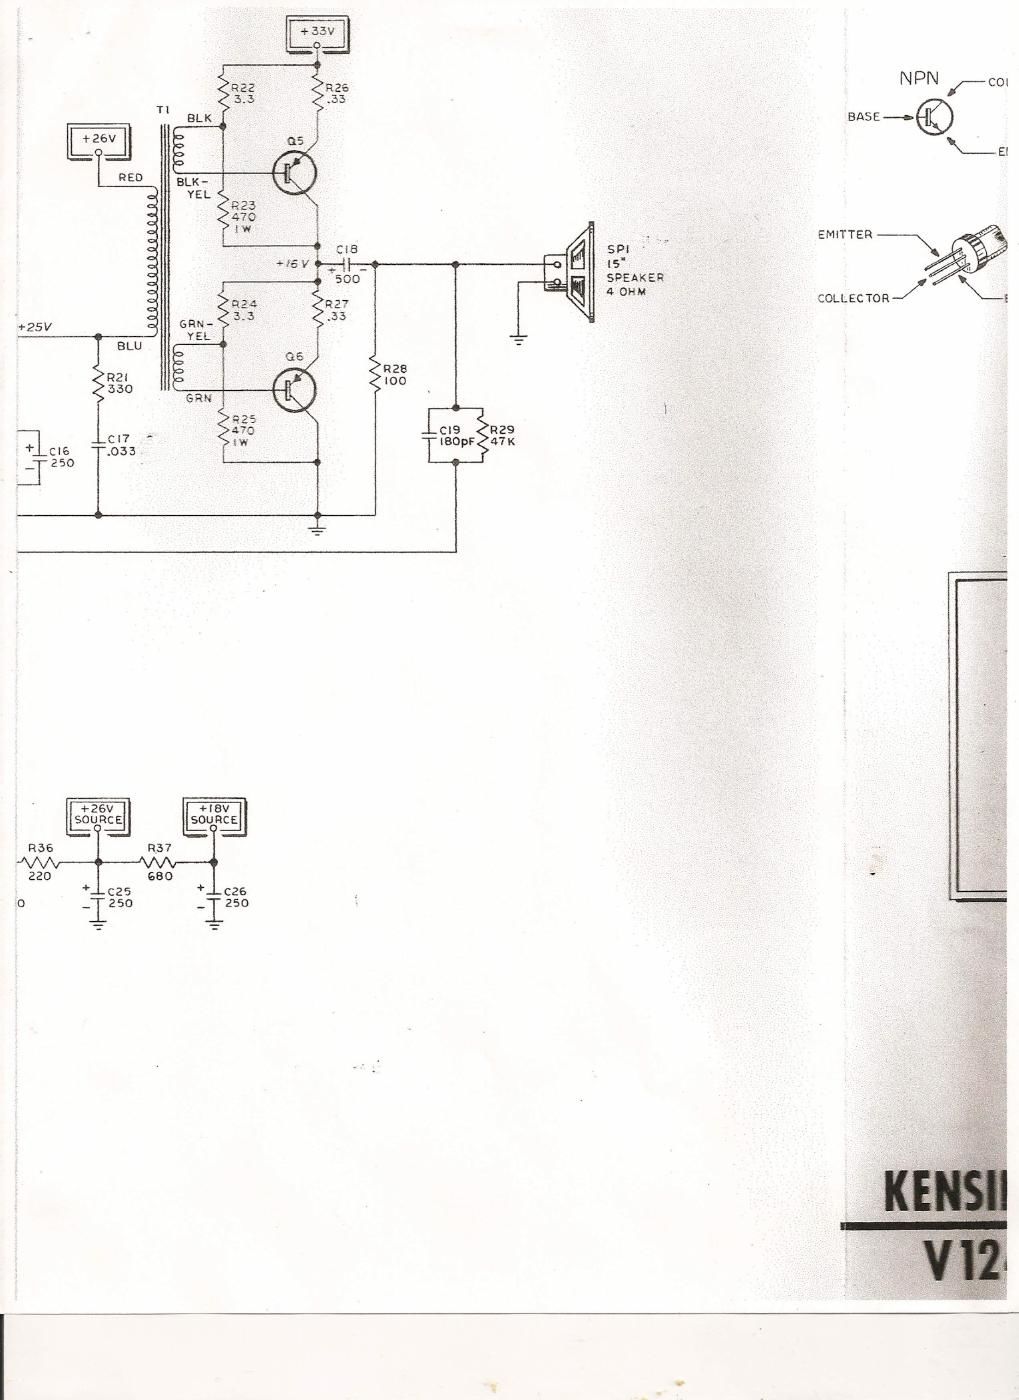 vox kensington power amp schematic